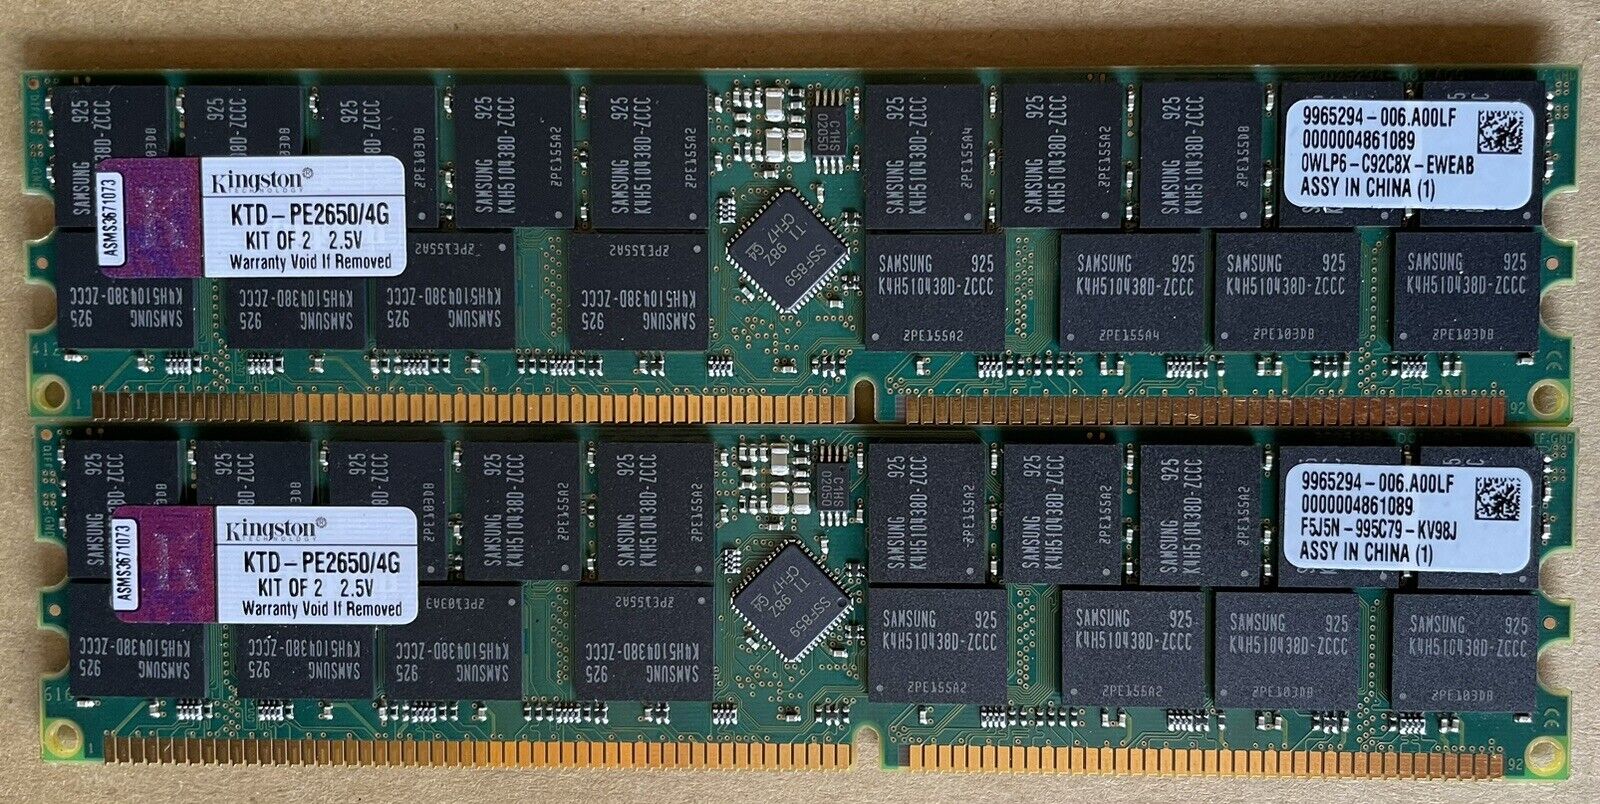 Kingston KTD-PE2650/4G DDR 266 PC2100 4GB ECC REG KIT (2GB x2) Server Memory